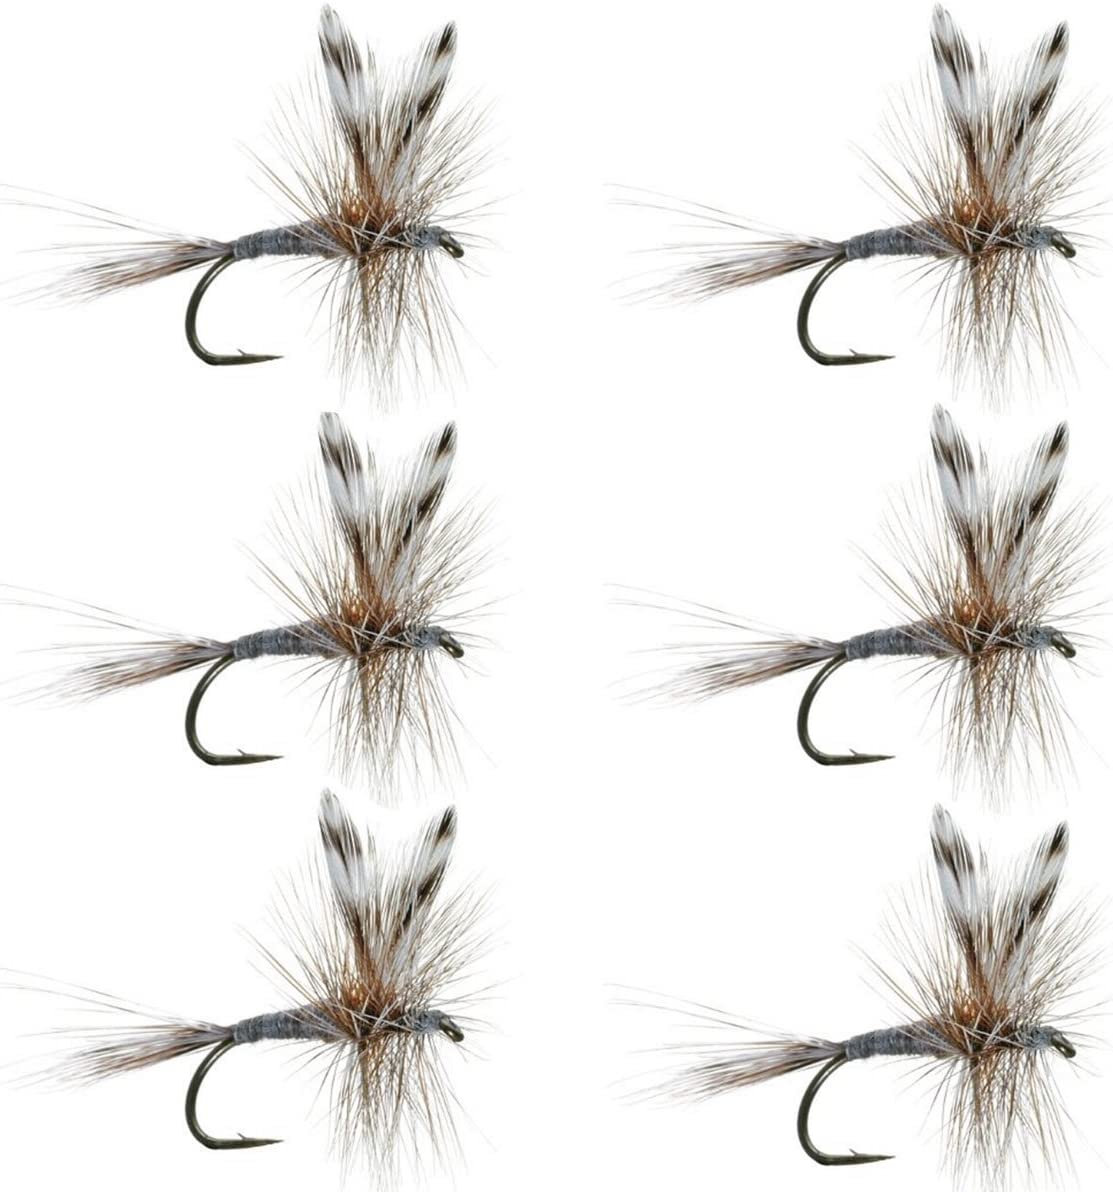 Adams Classic Dry Fly - Anzuelo para 6 moscas, tamaño 14